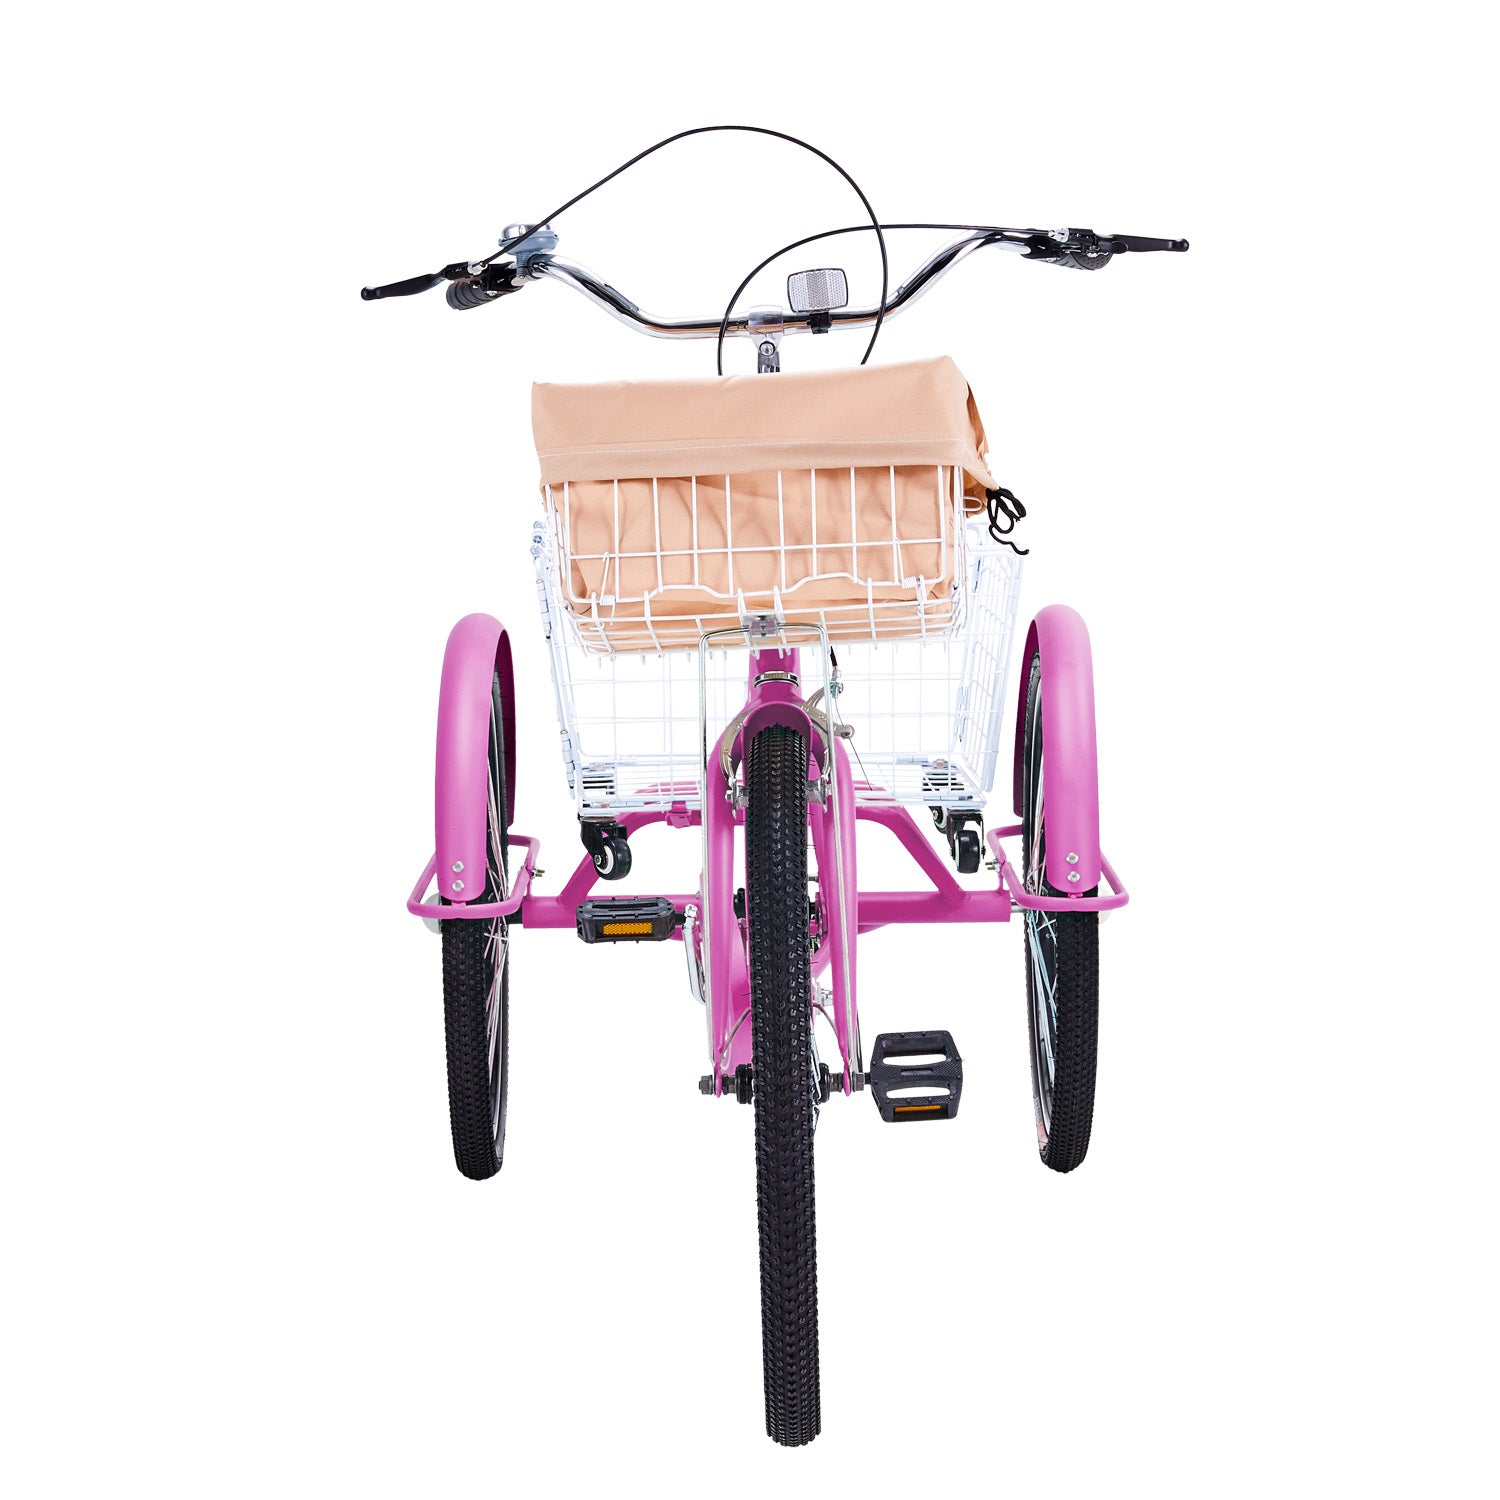 Viribus Adult Tricycle For Sale, Three Wheel Bike 3 wheel bike